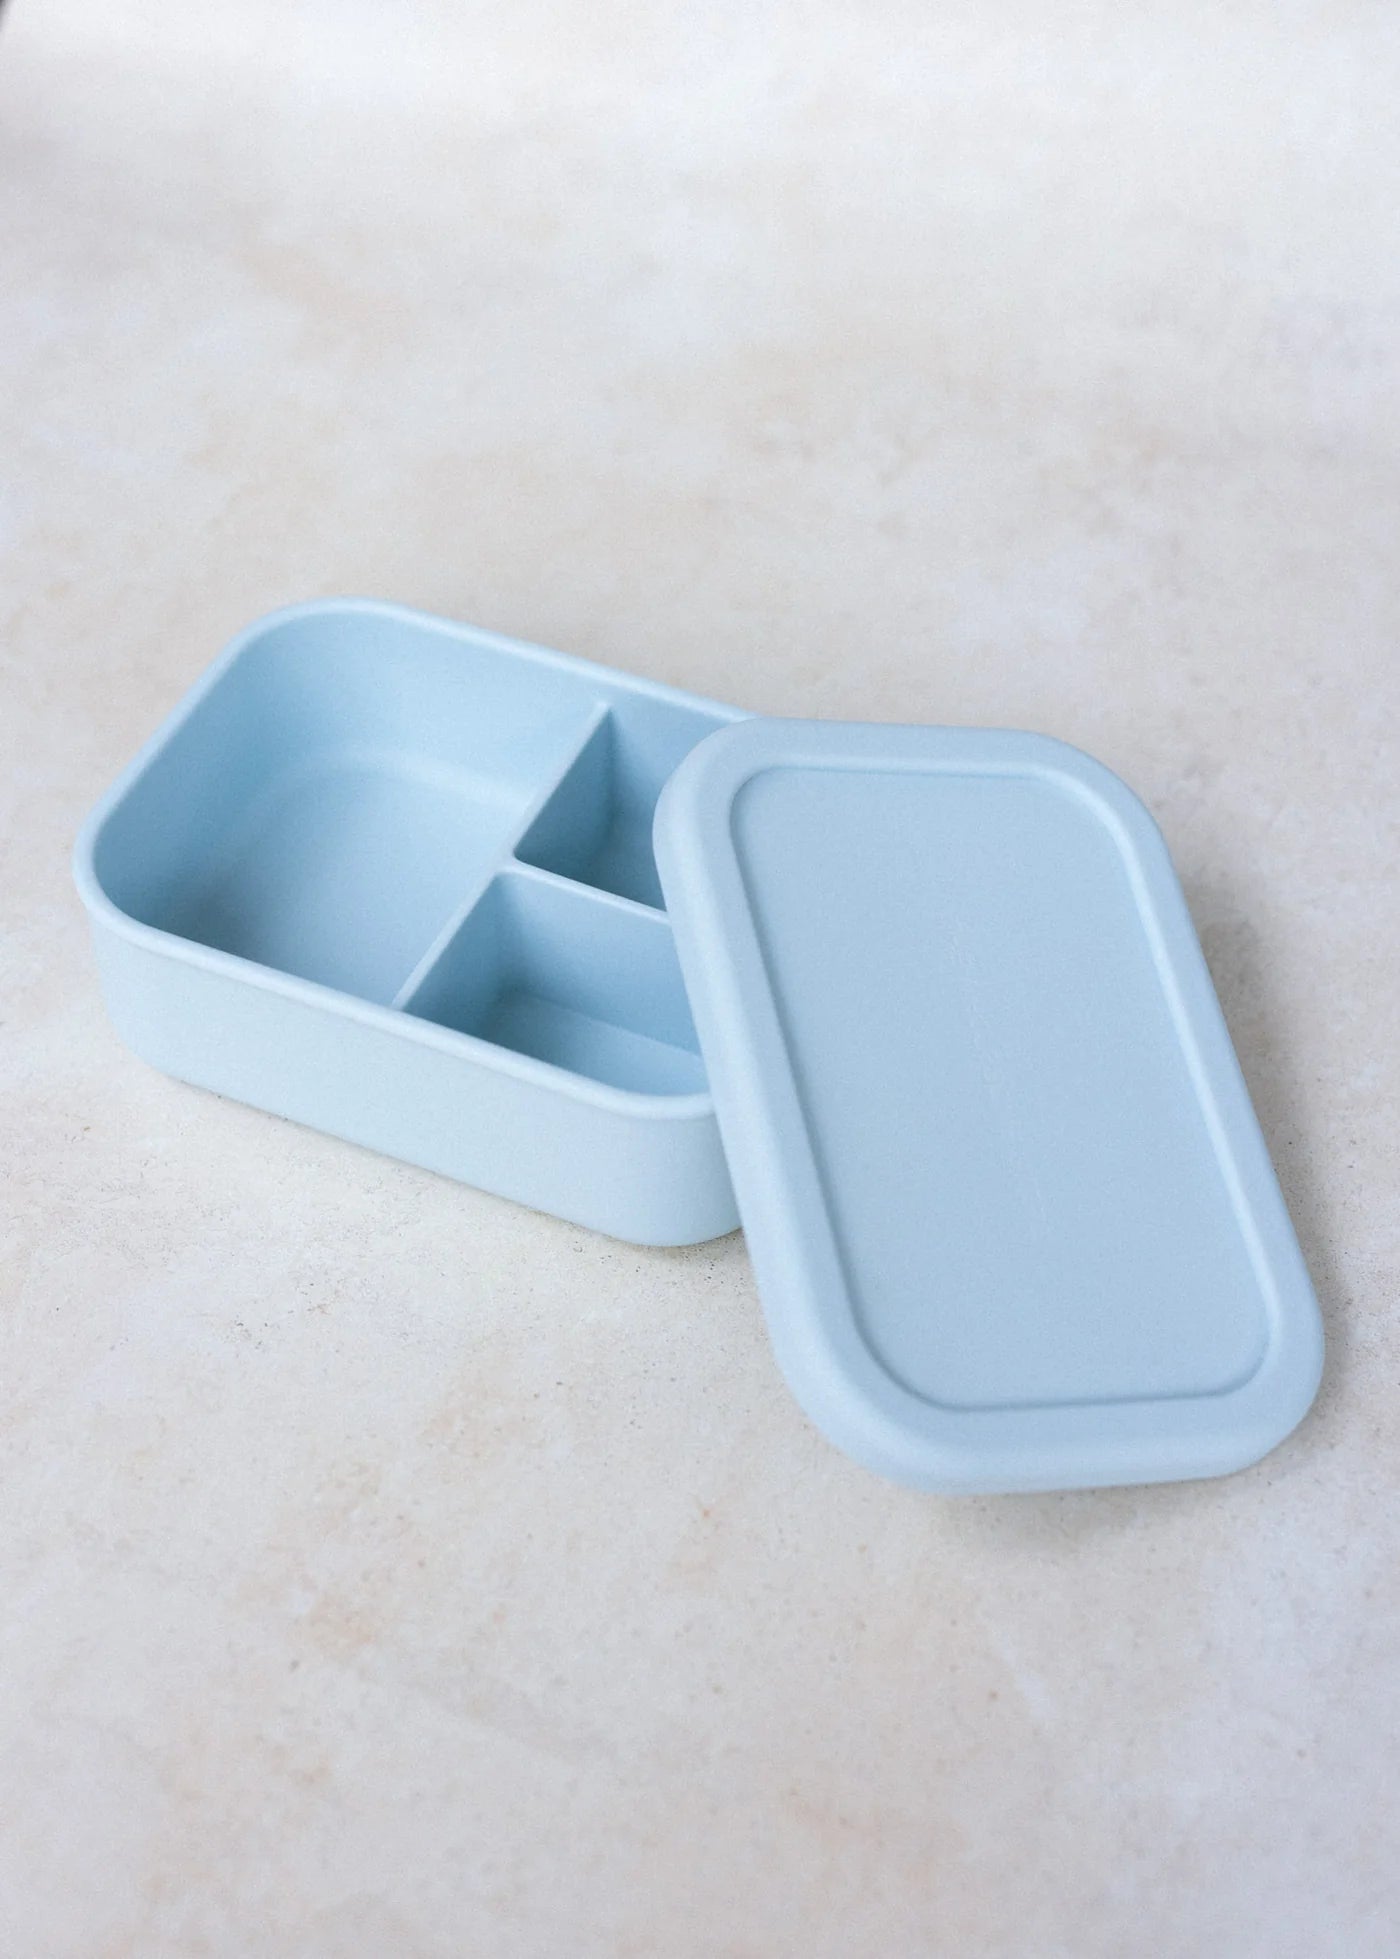 Silicone Bento Lunchbox - Sea Salt $37 down to $32